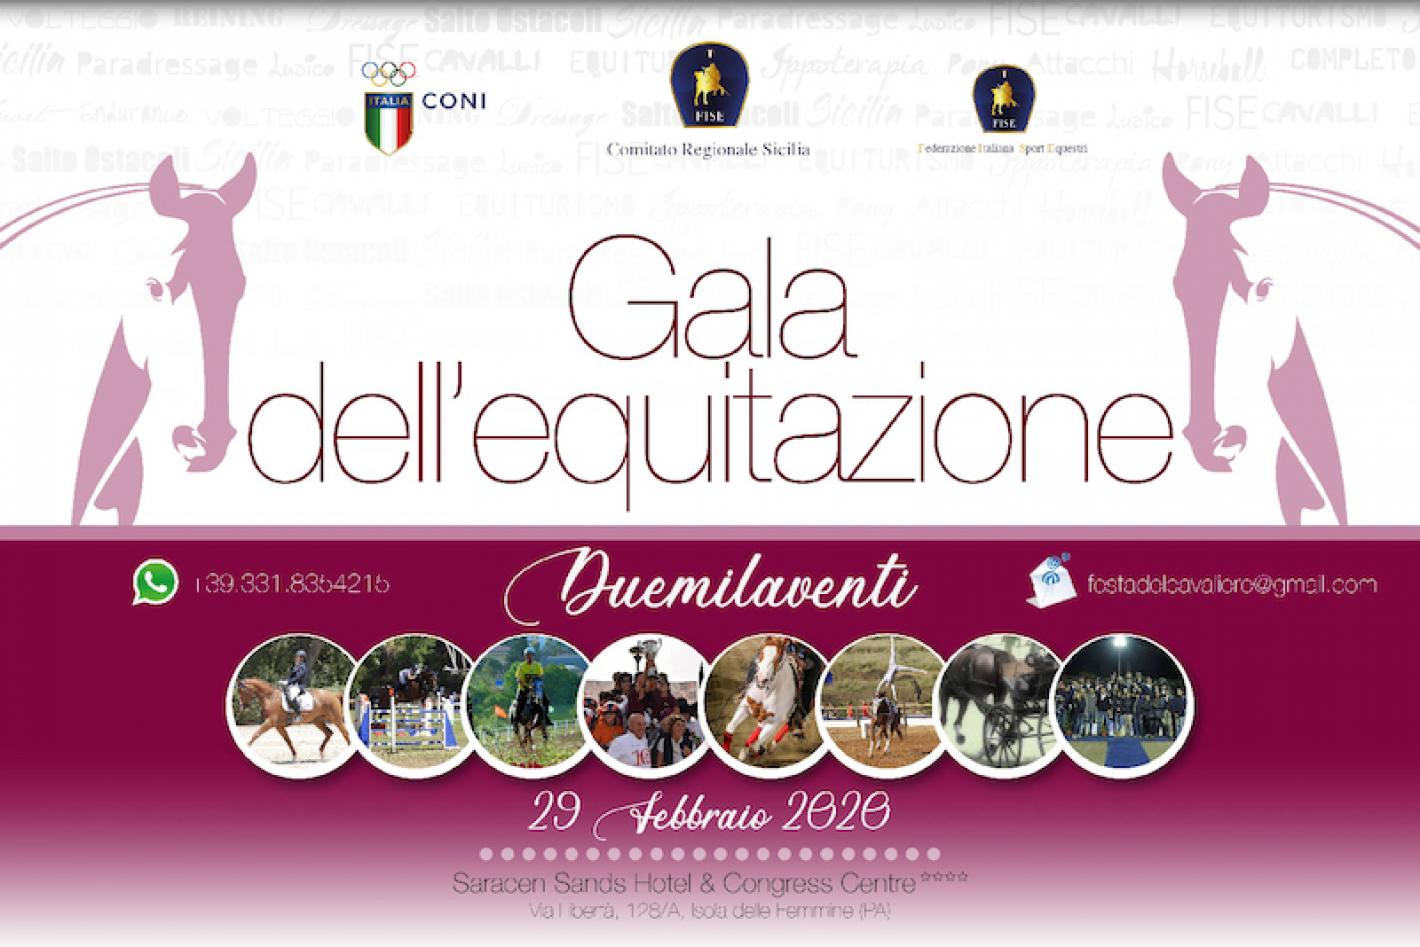 images/sicilia/News_Generiche/medium/gala_equitazione2020.jpg